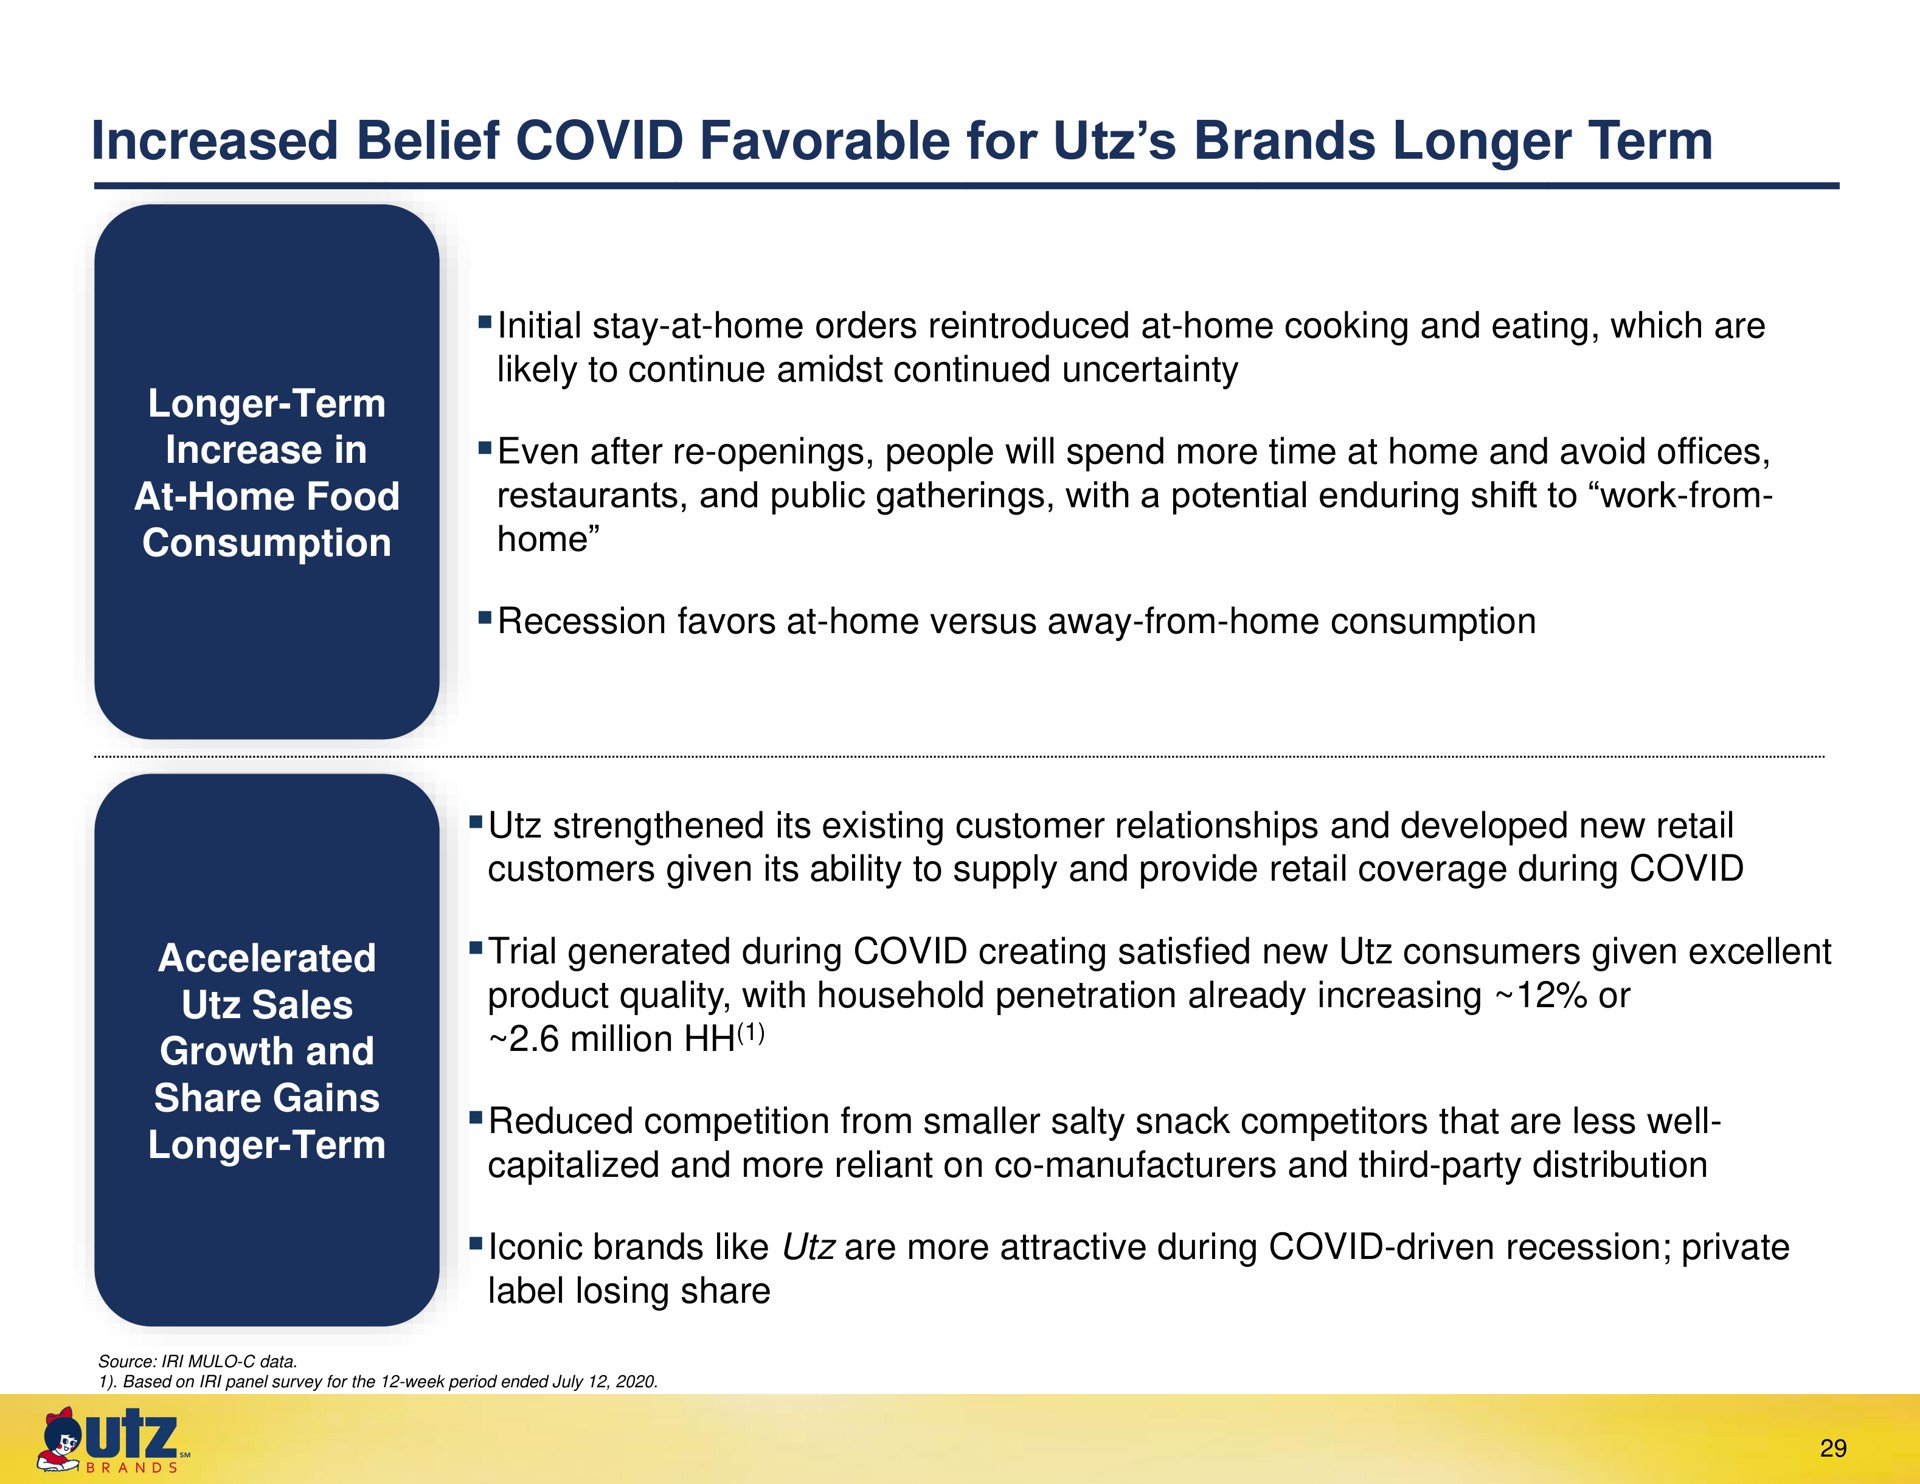 increased belief covid favorable for brands longer term consumption | UTZ Brands